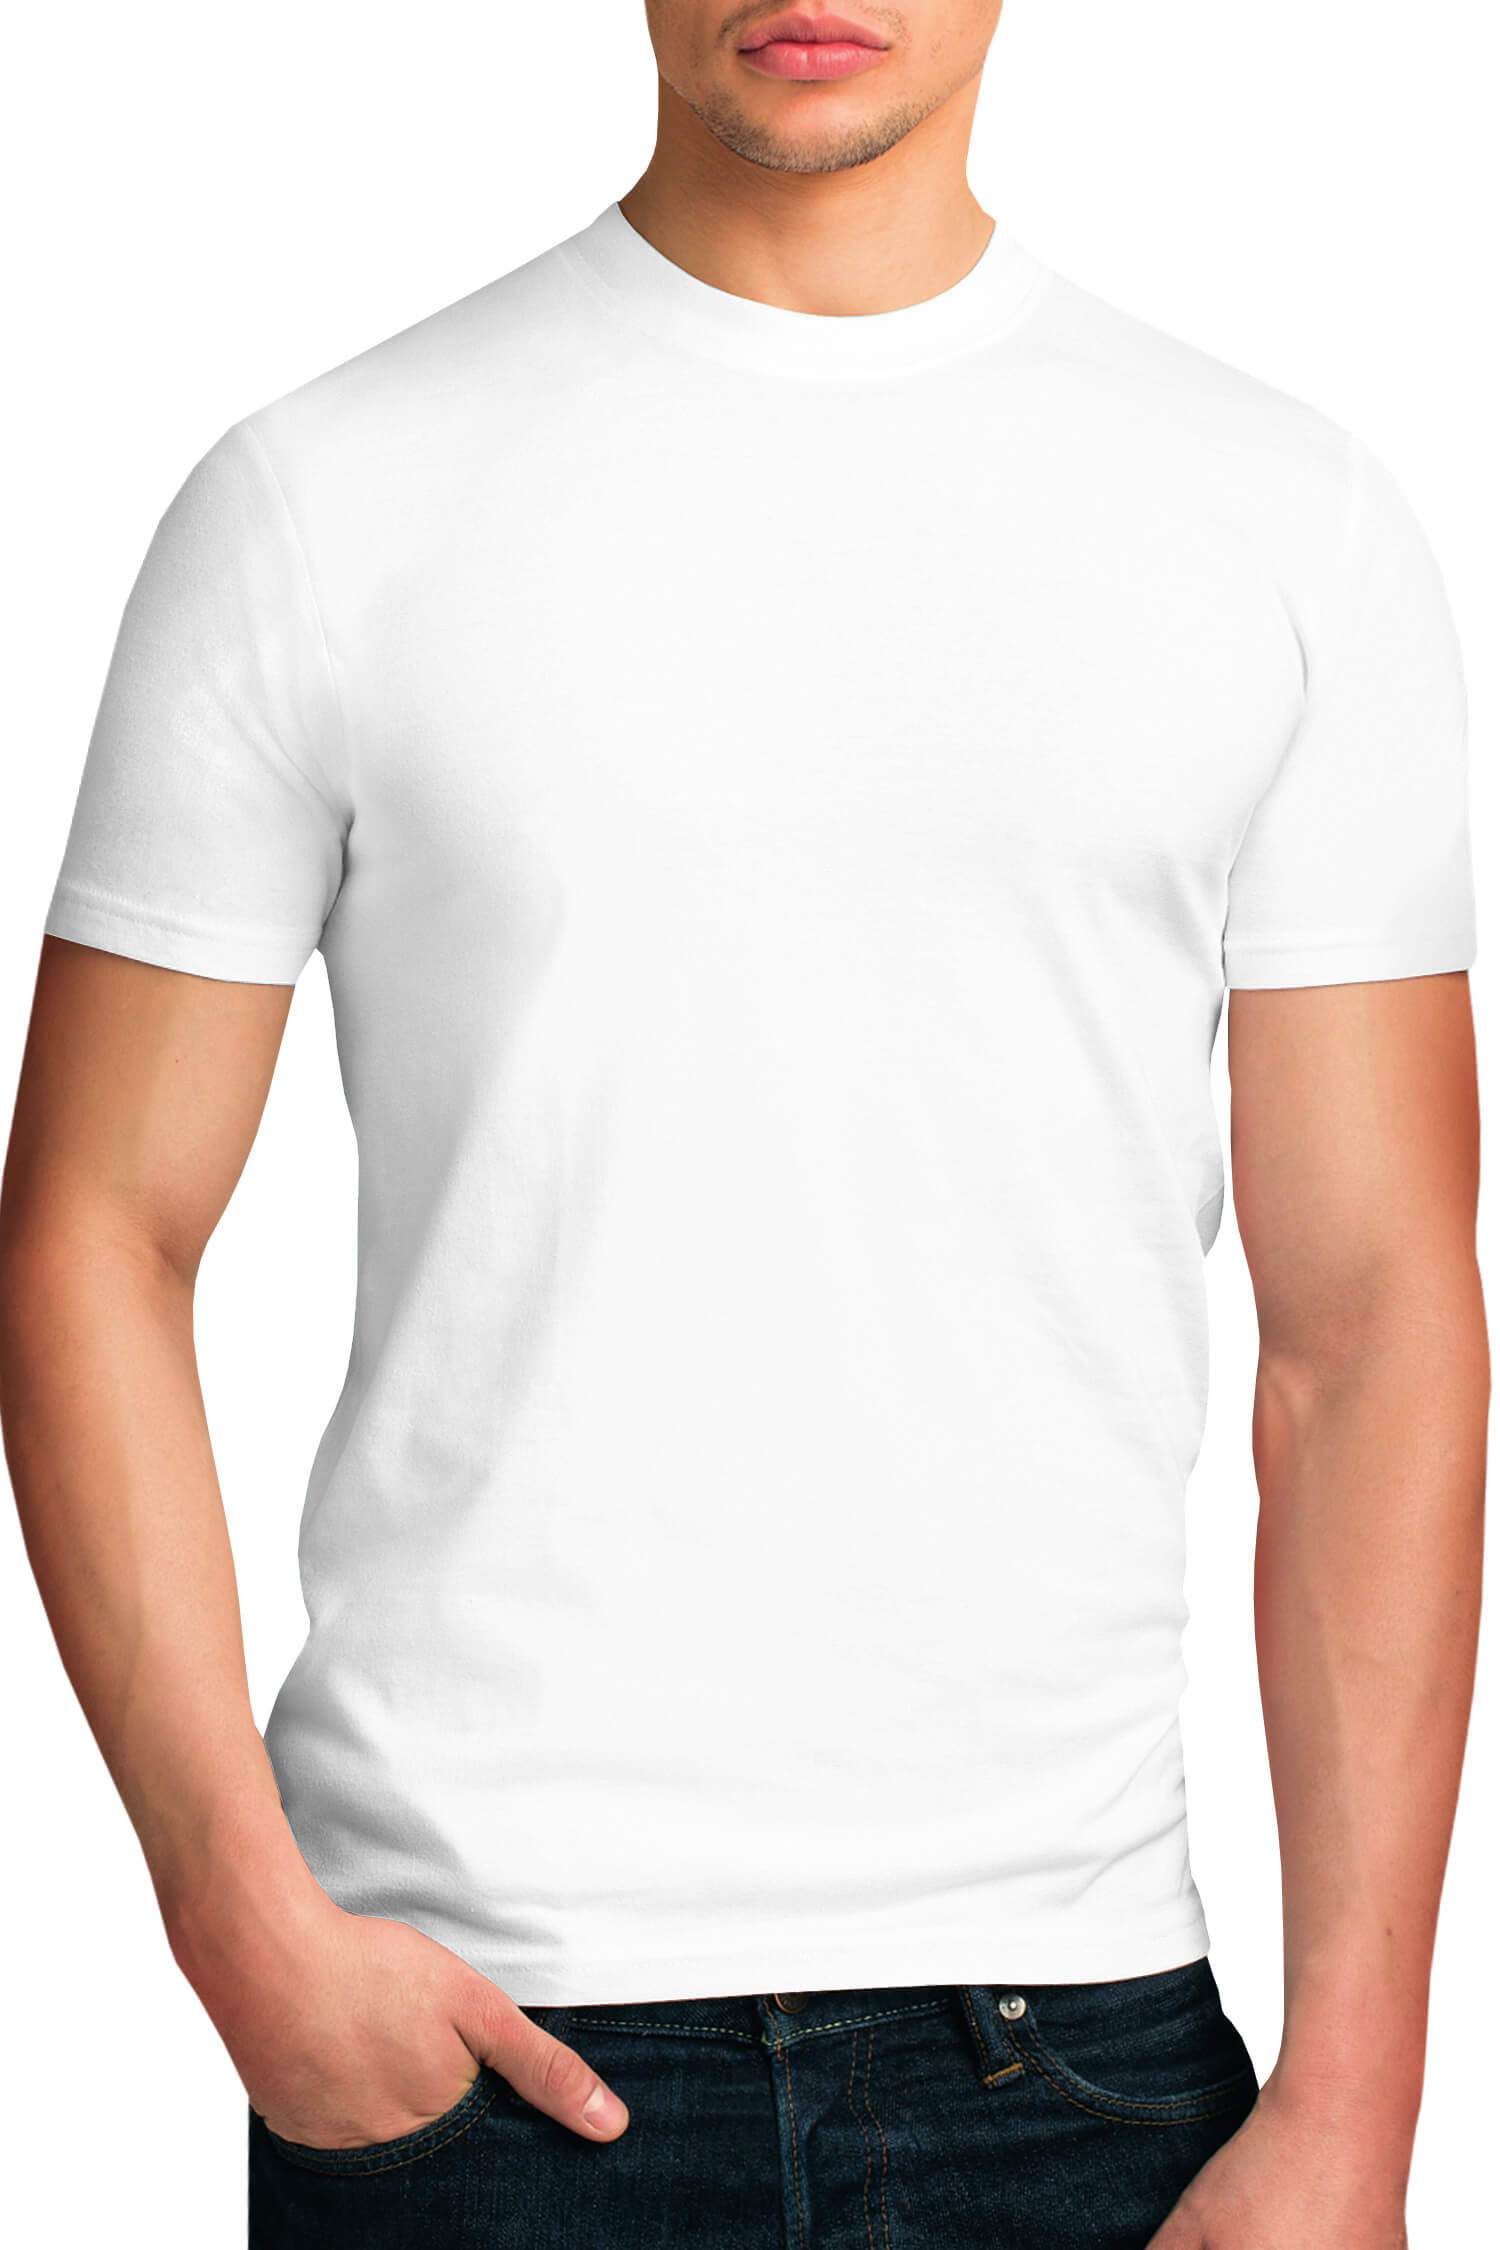 DIM Basic bavlněné tričko pánské XL bílá